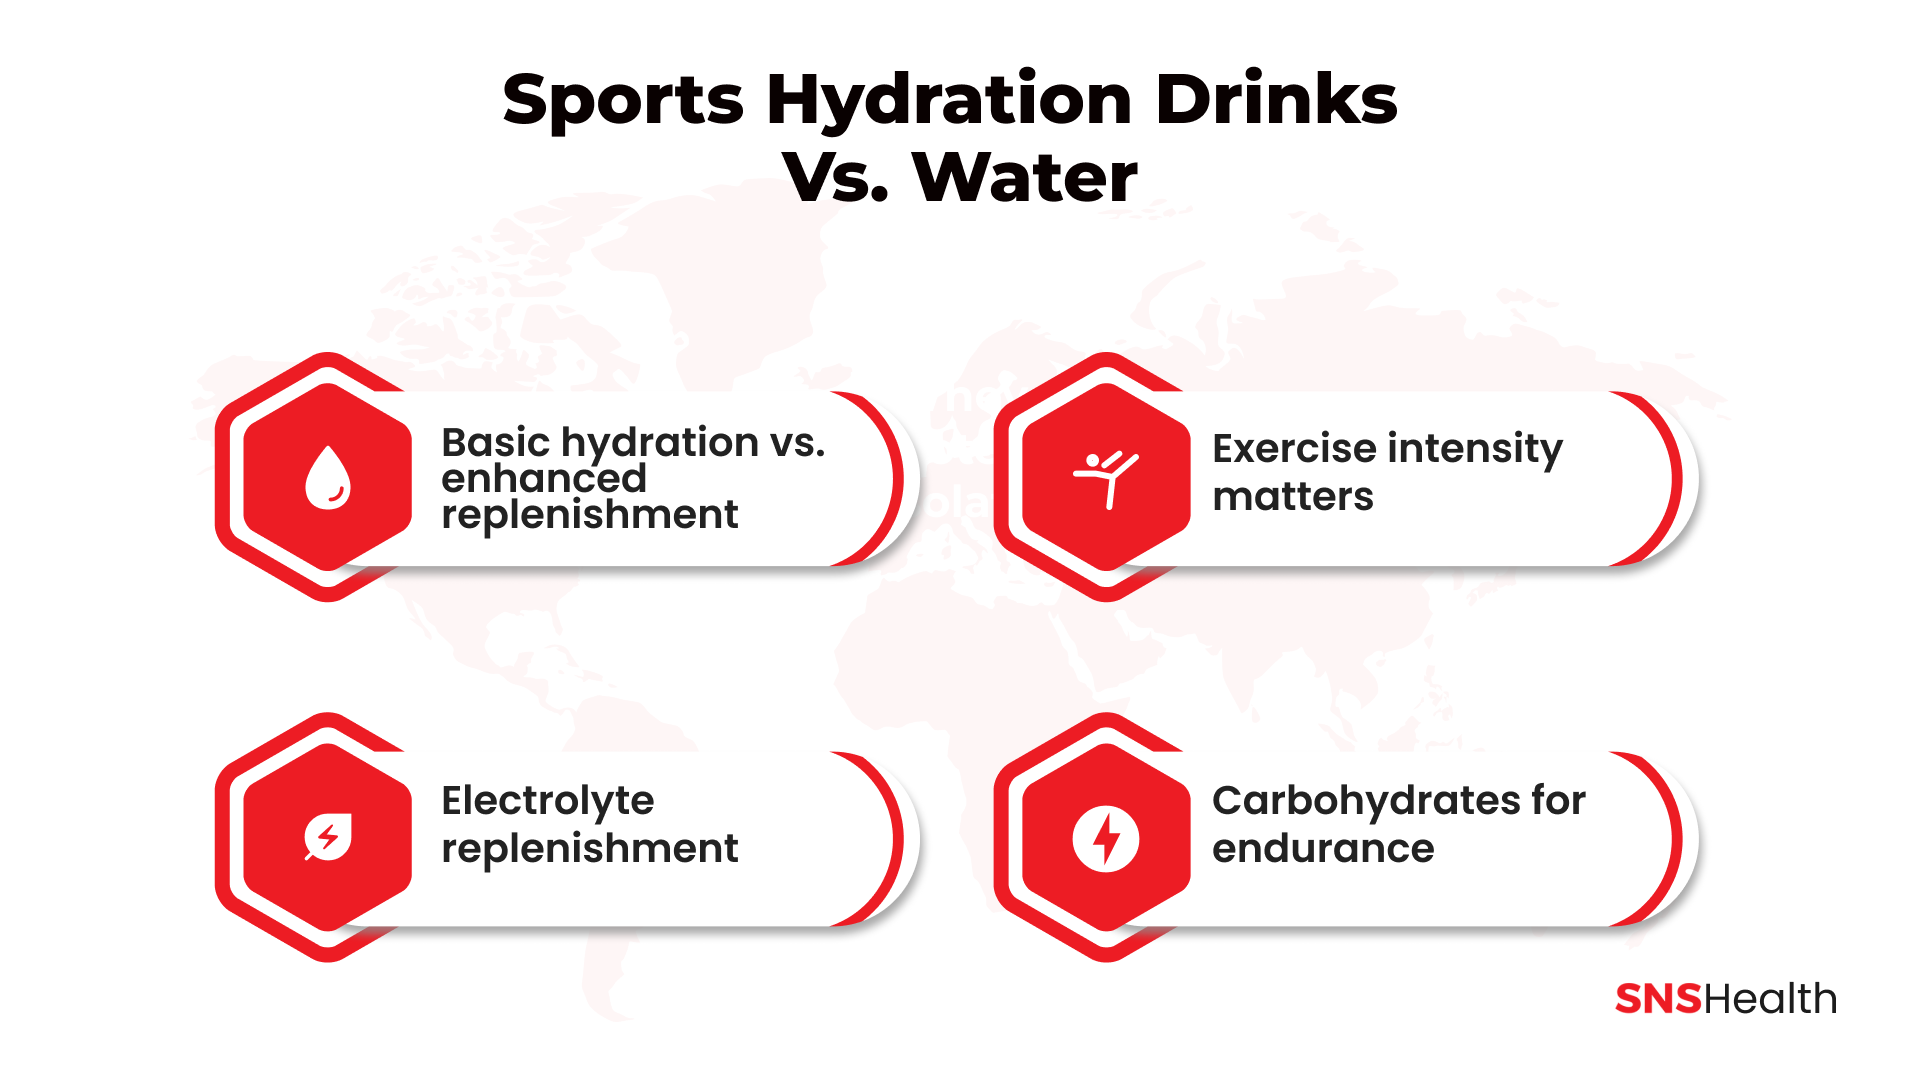 Sports Hydration Drinks vs Water